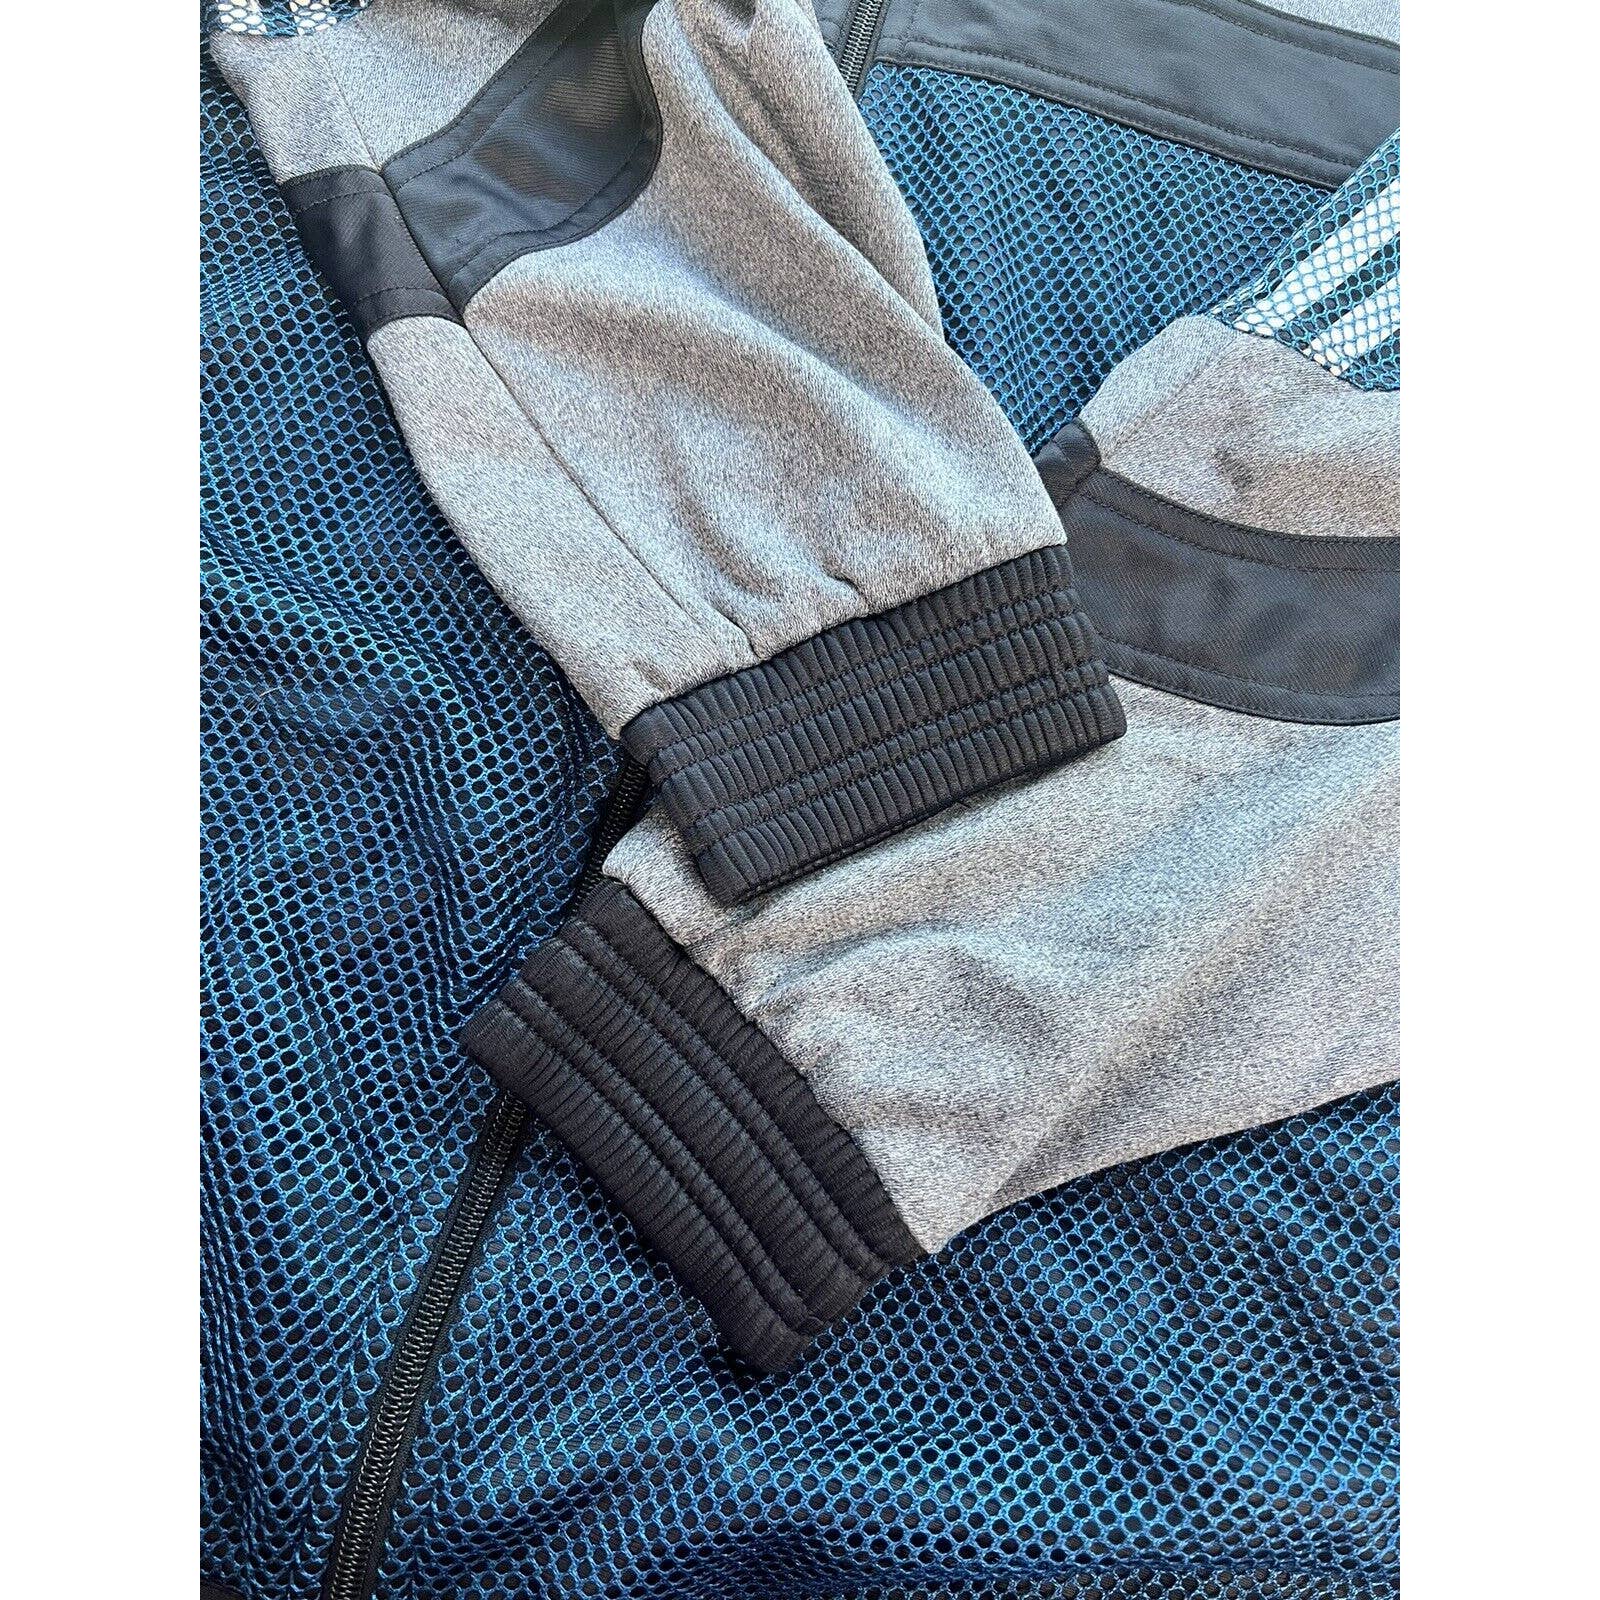 Vintage Adidas Warm Up Jacket Men’s XL Full Zip Mesh Lightweight Black Blue Gray